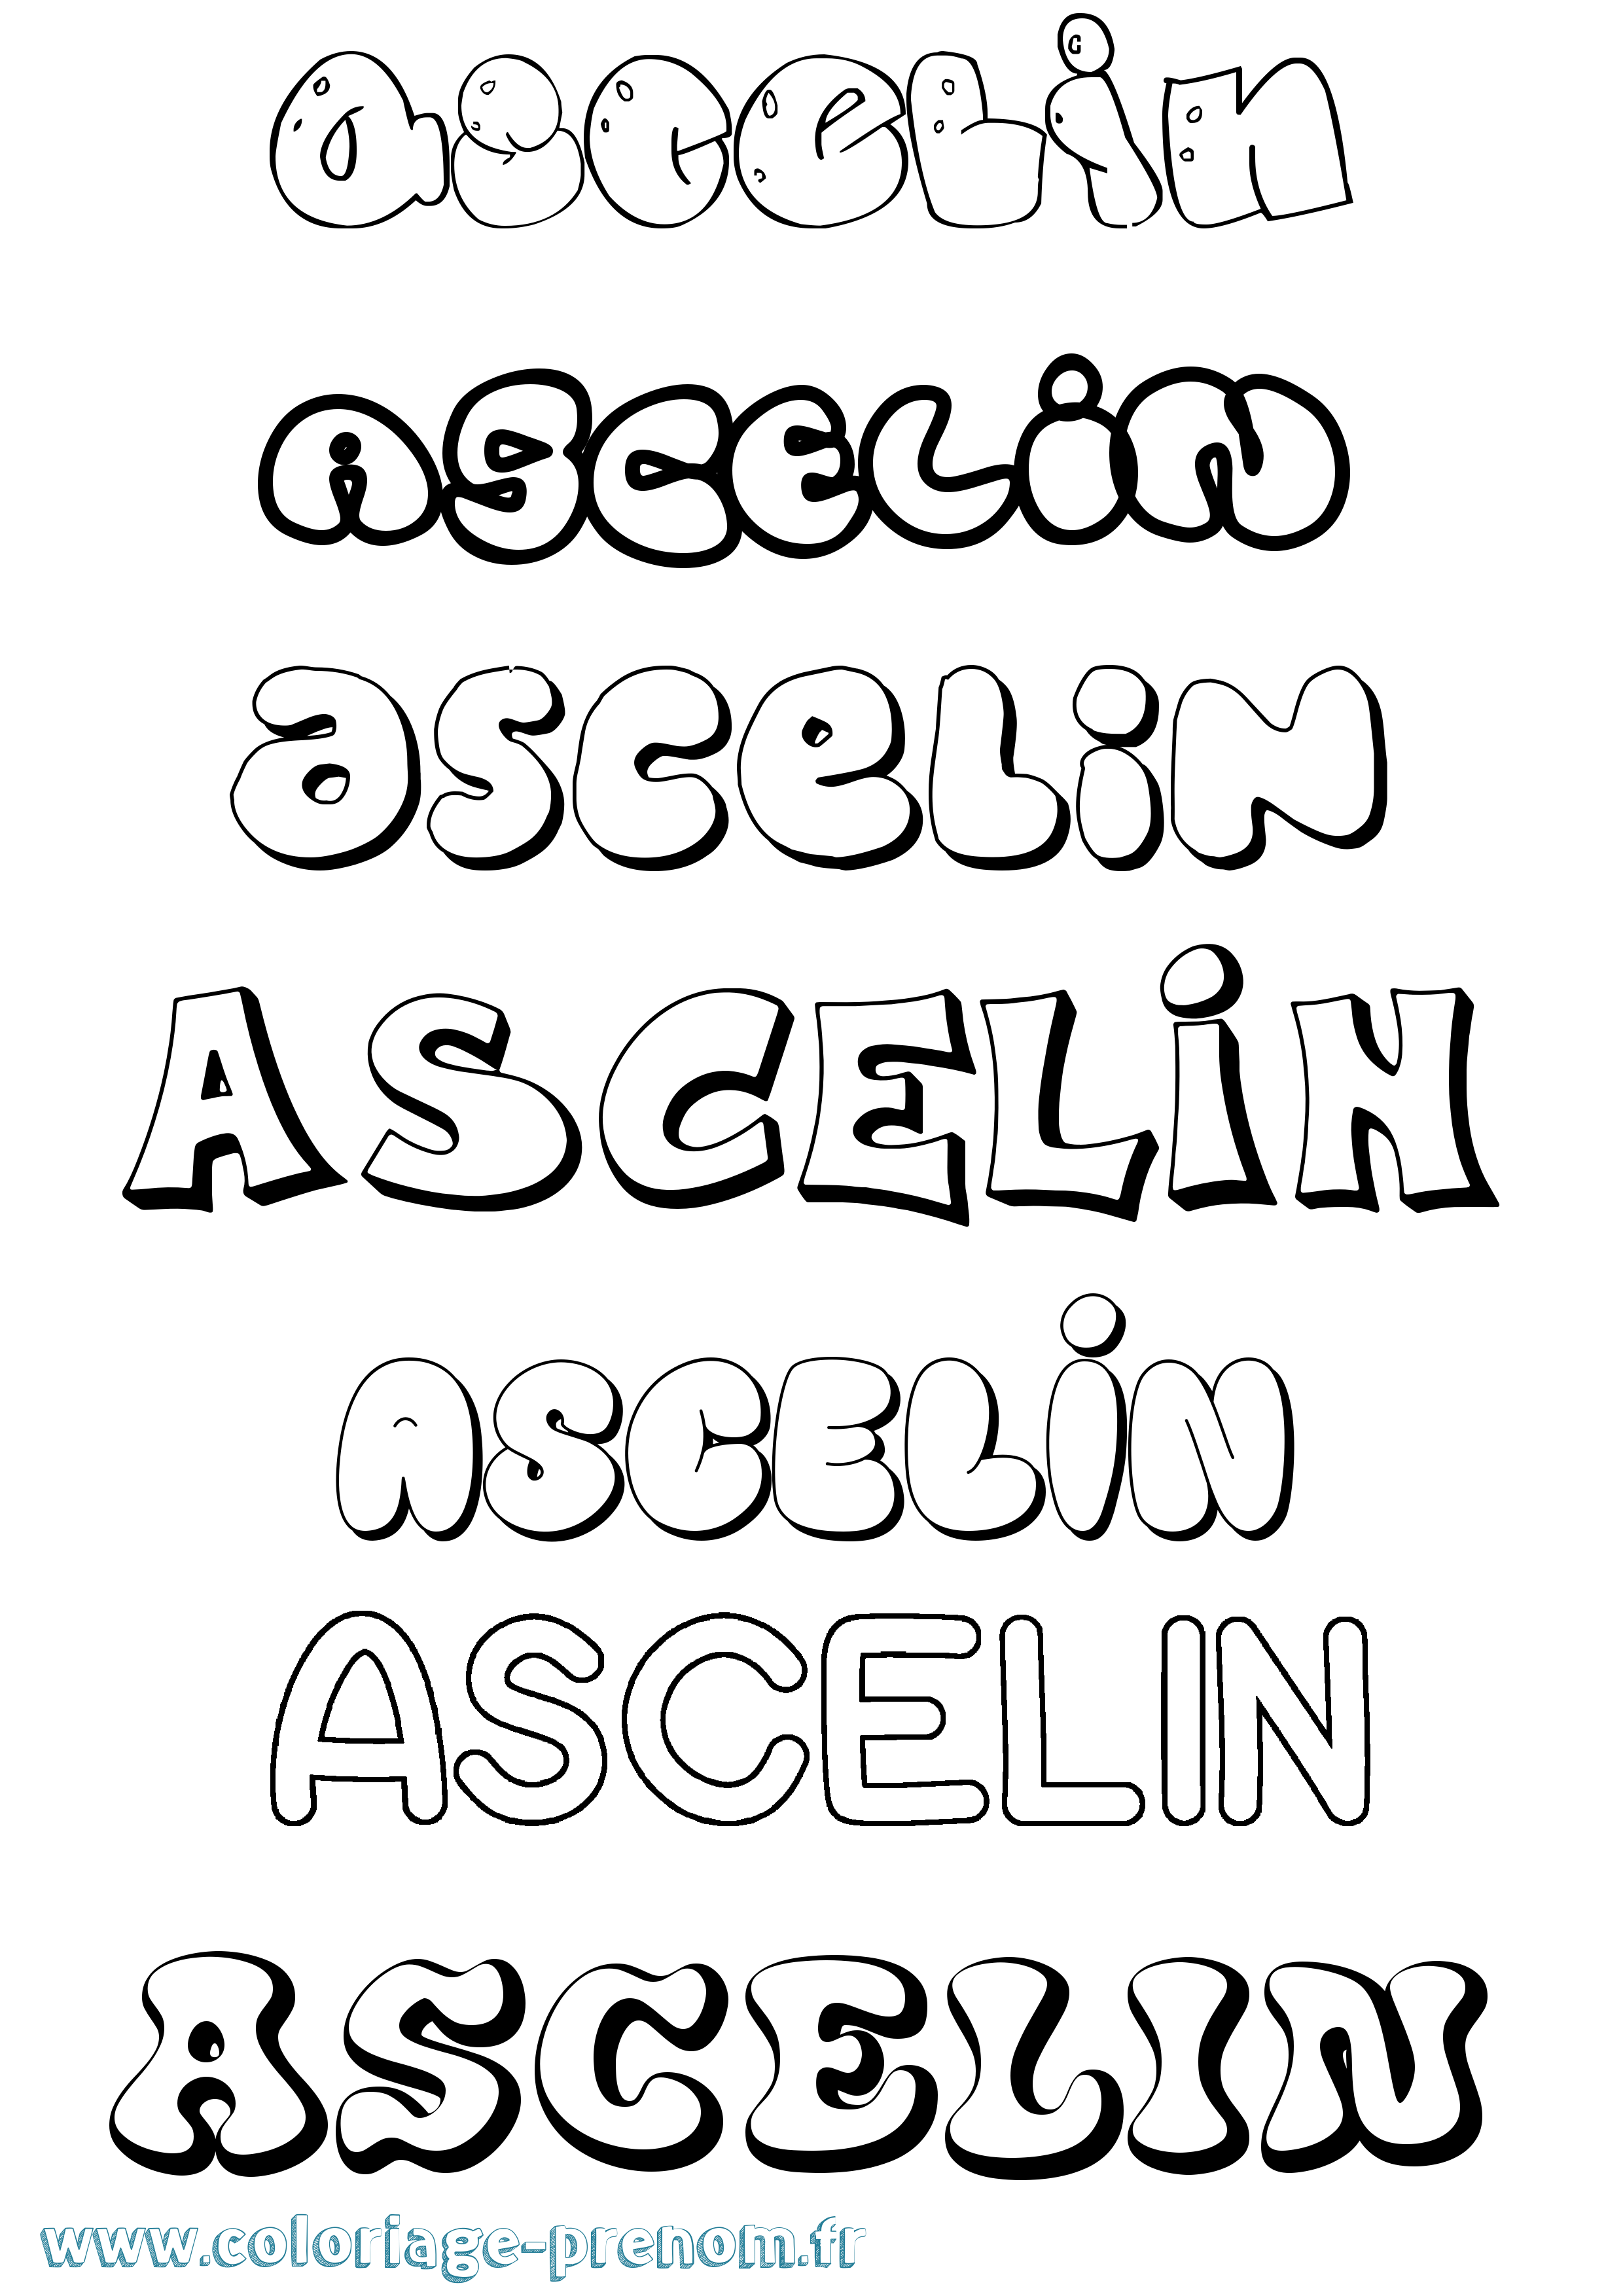 Coloriage prénom Ascelin Bubble